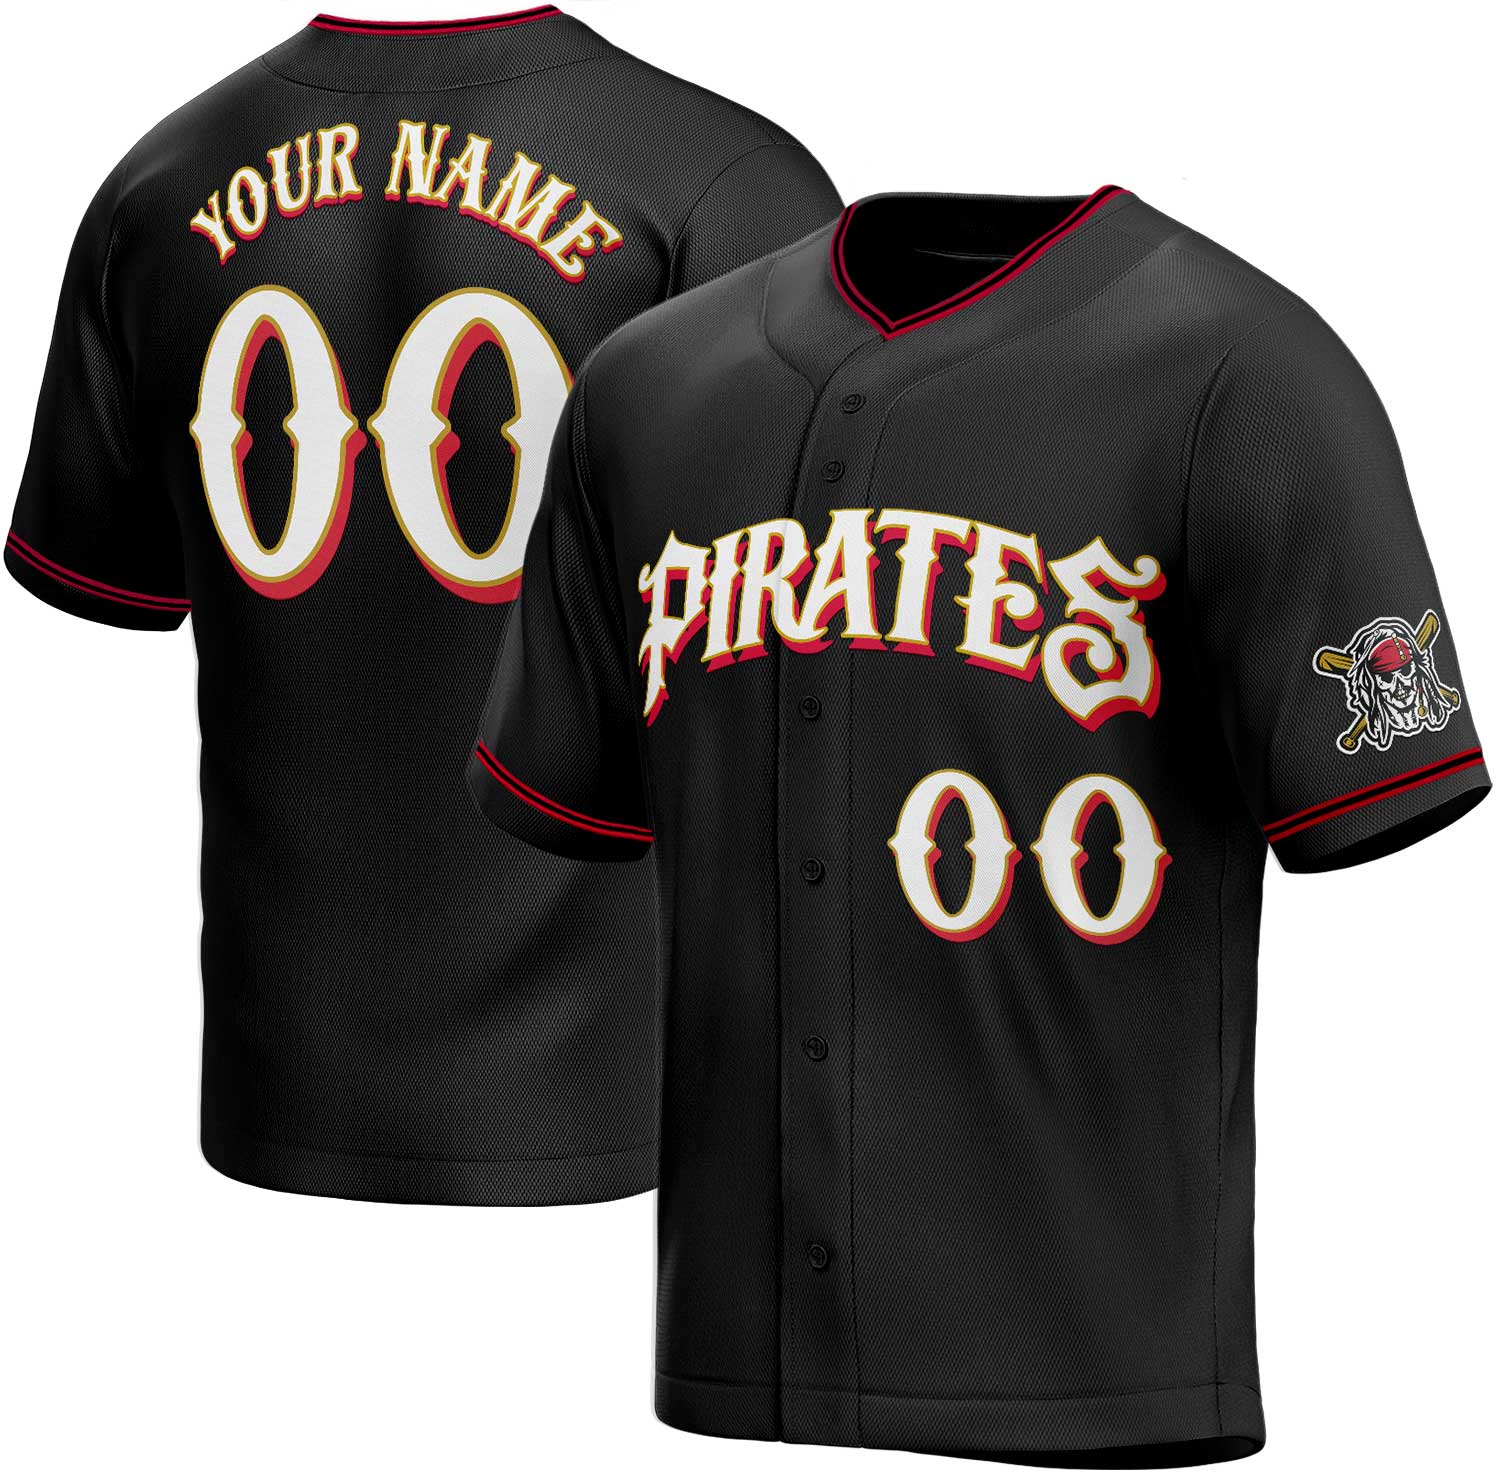 pirates baseball team jersey